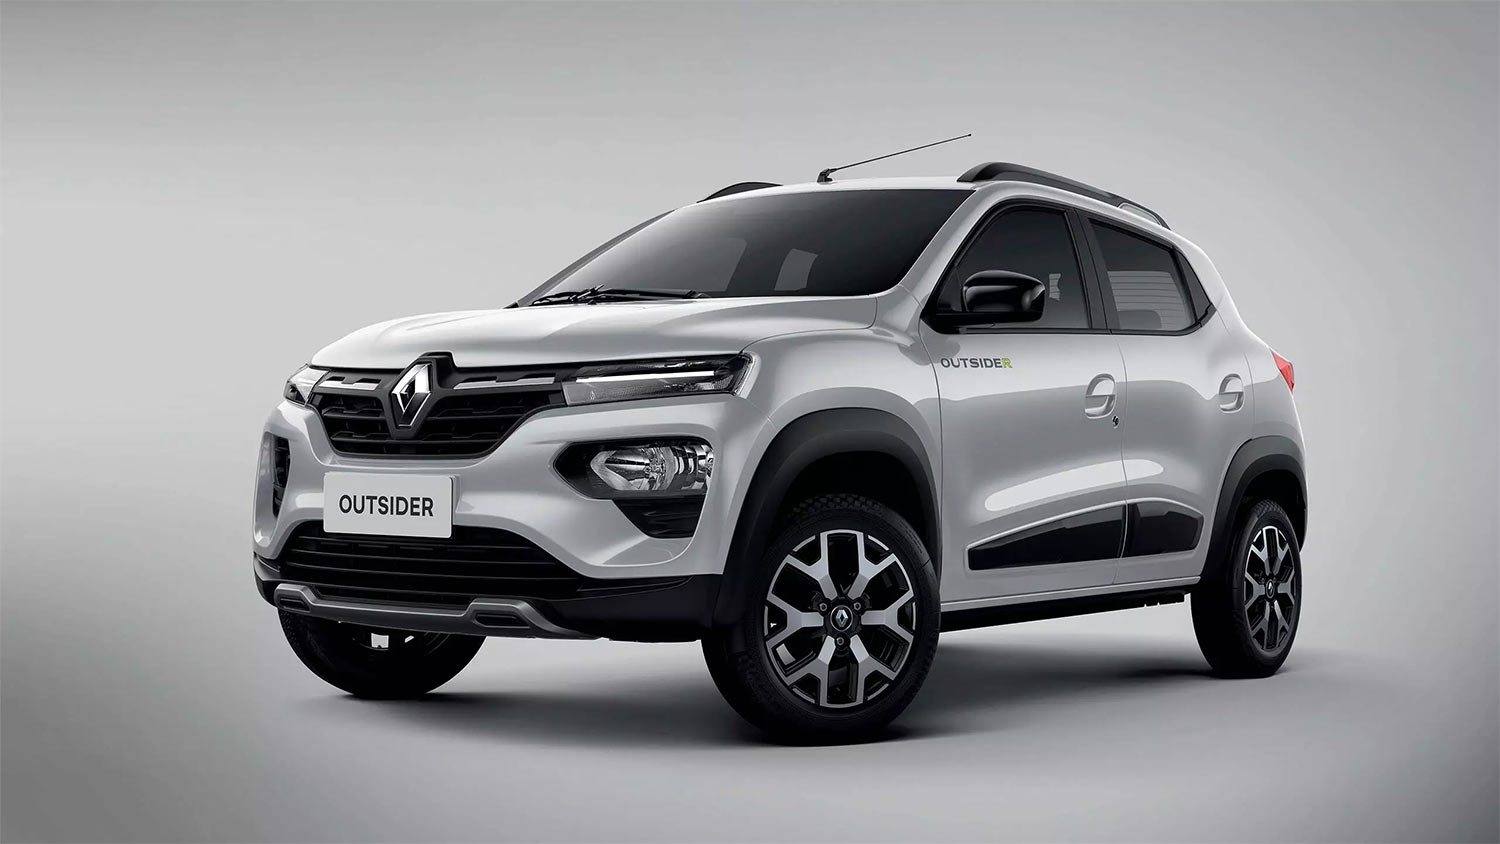 Renault KWID 2023 para México versión outsider blanco